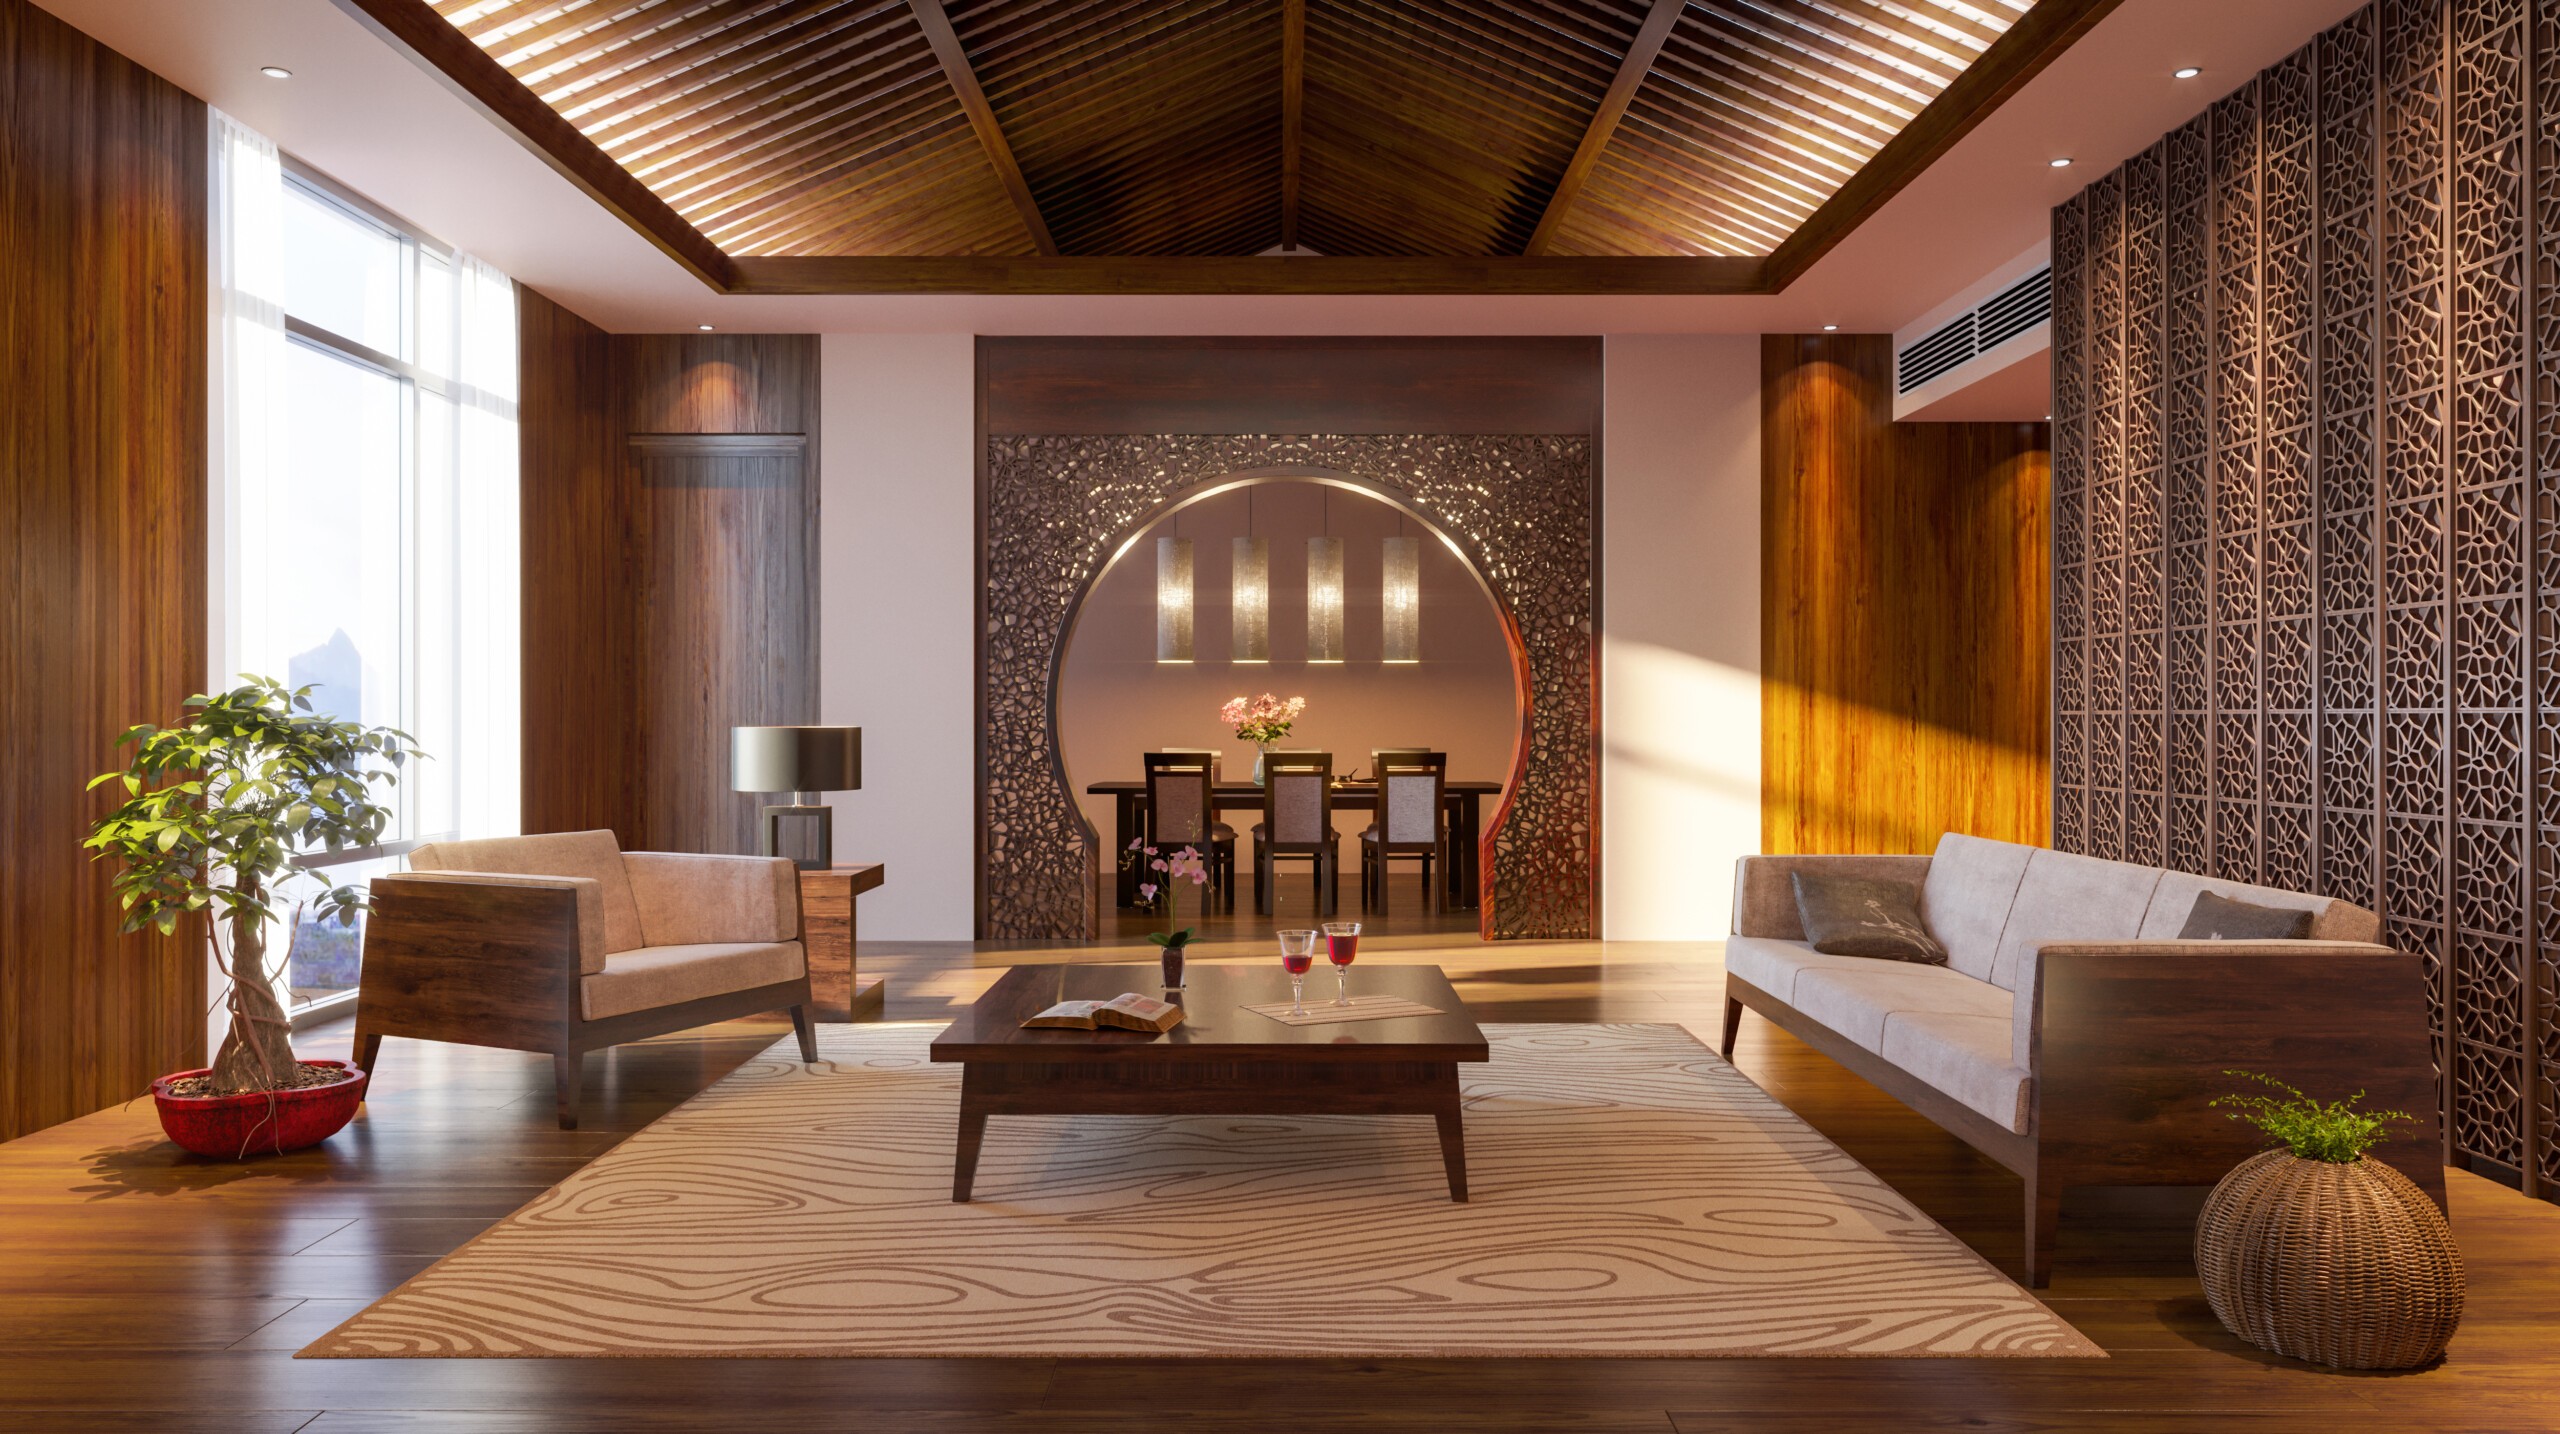 Asian Zen Interior Design The Best Way To Master It Décor Aid